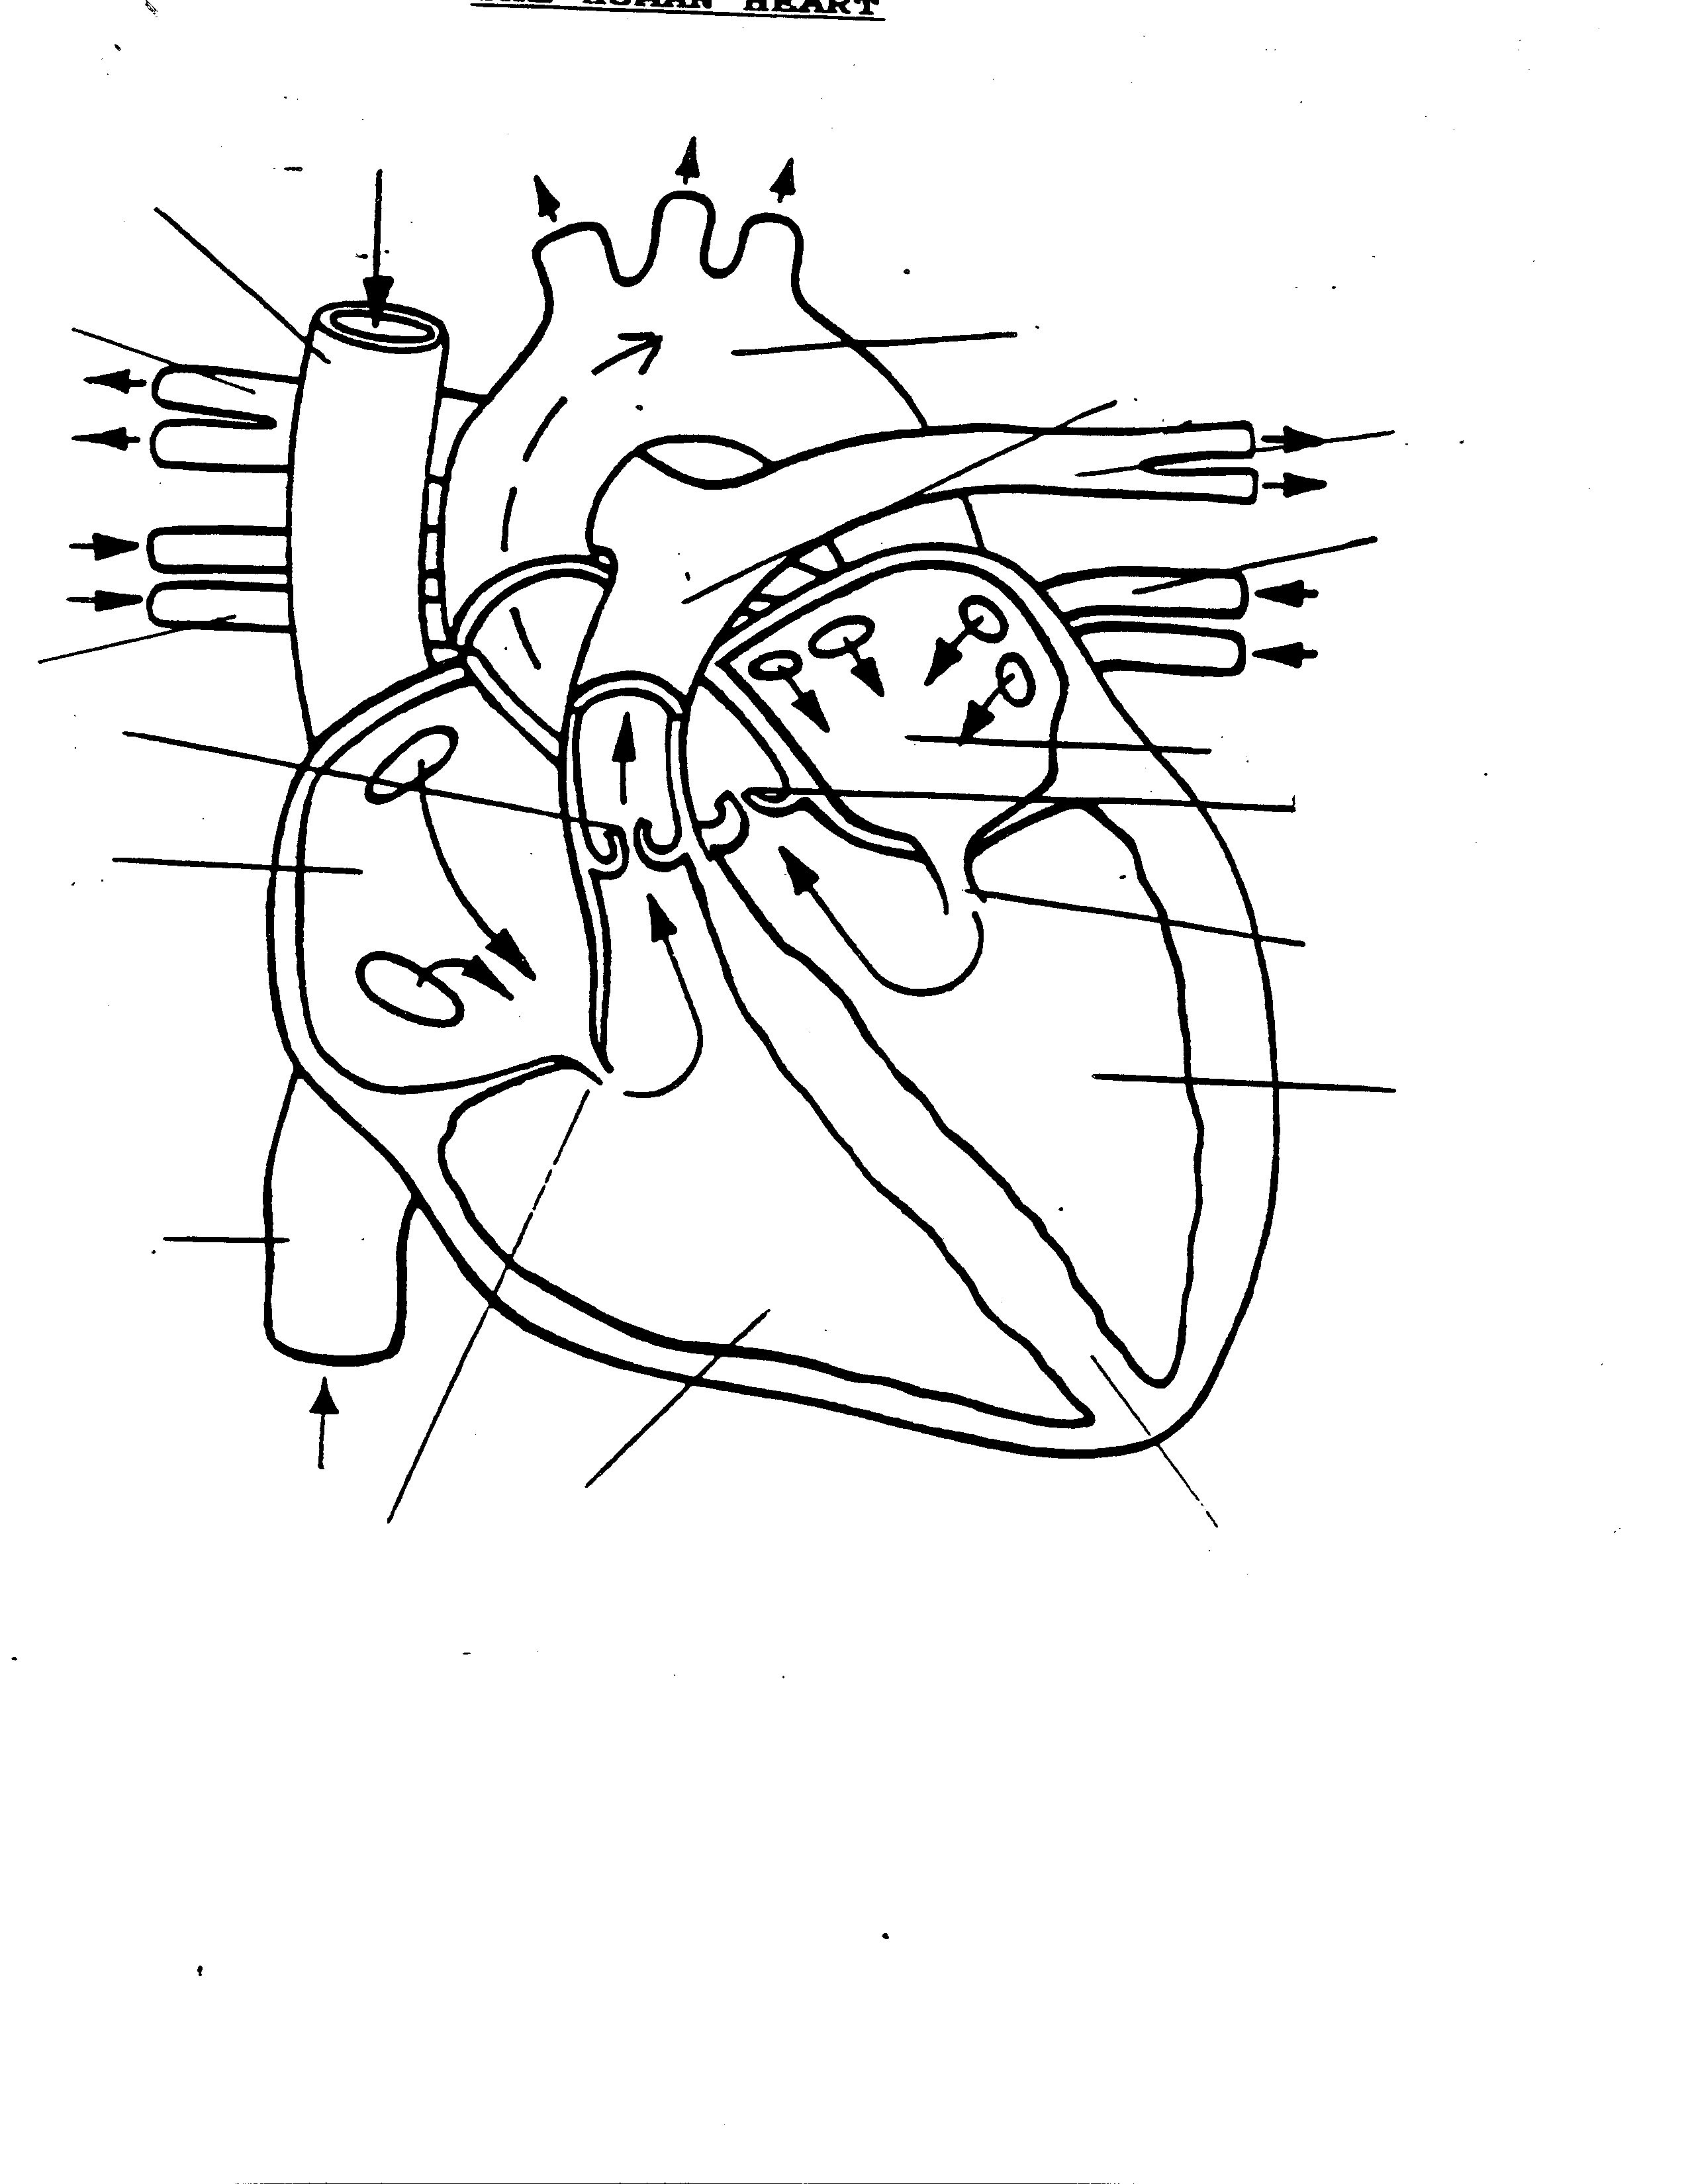 Human Heart Diagram Black And White Hart Diagram Human Heart Diagram Black And White